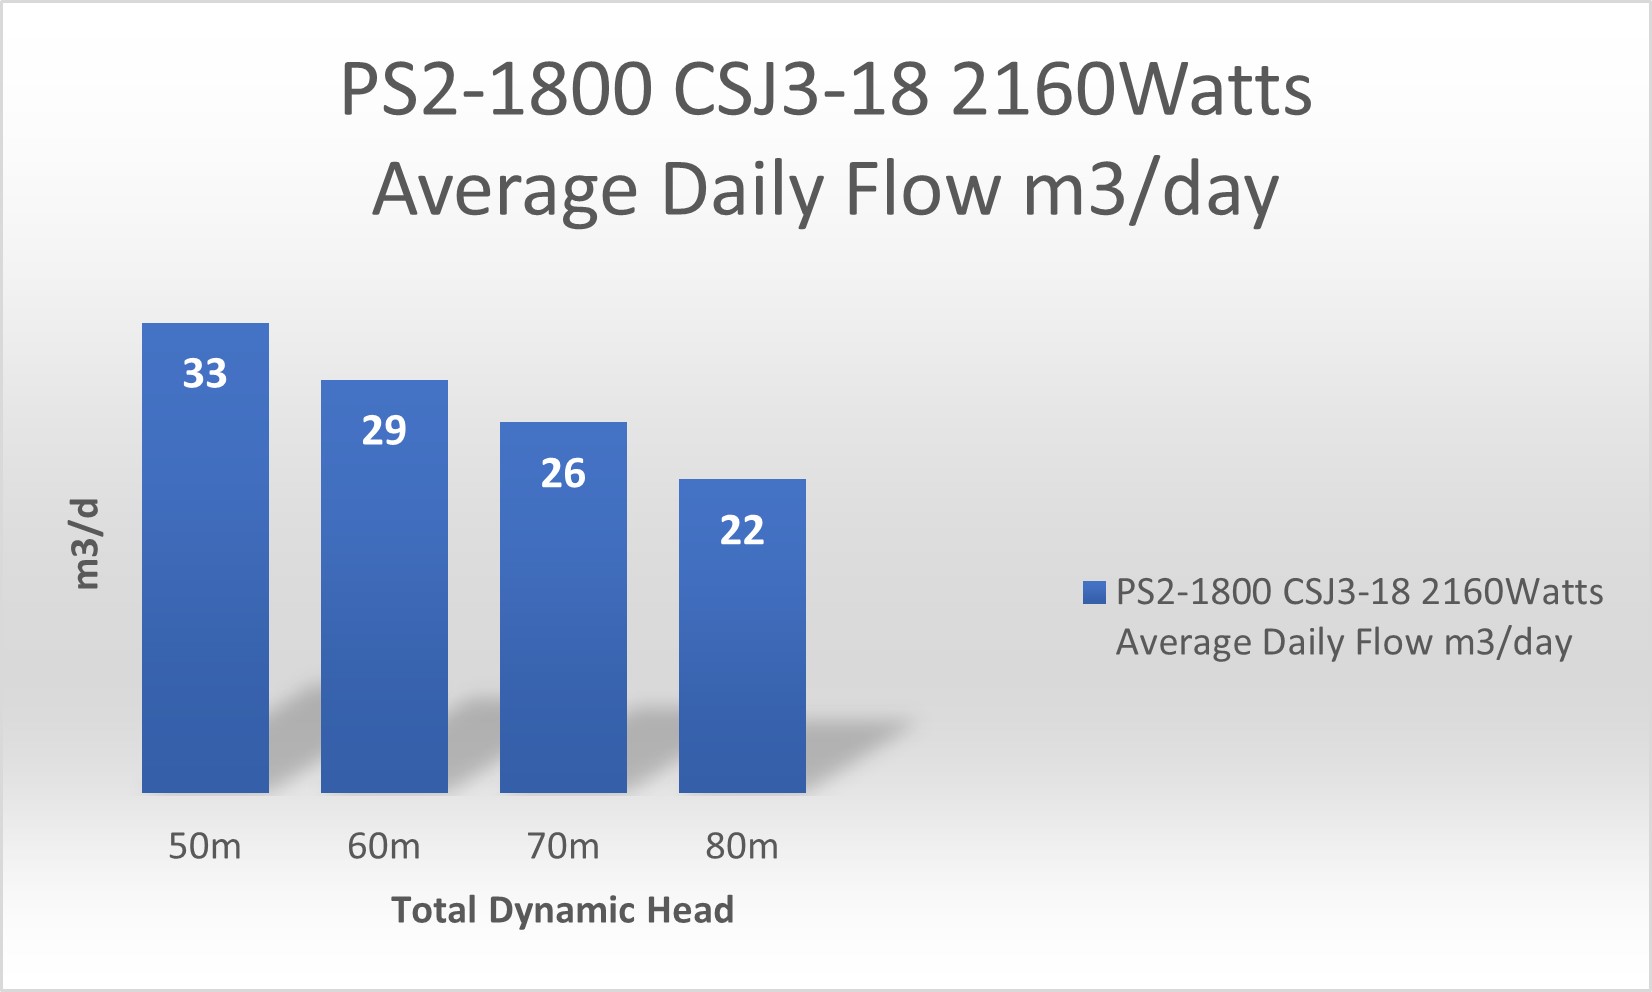 PS2 1800 CSJ3-18 2160 watts